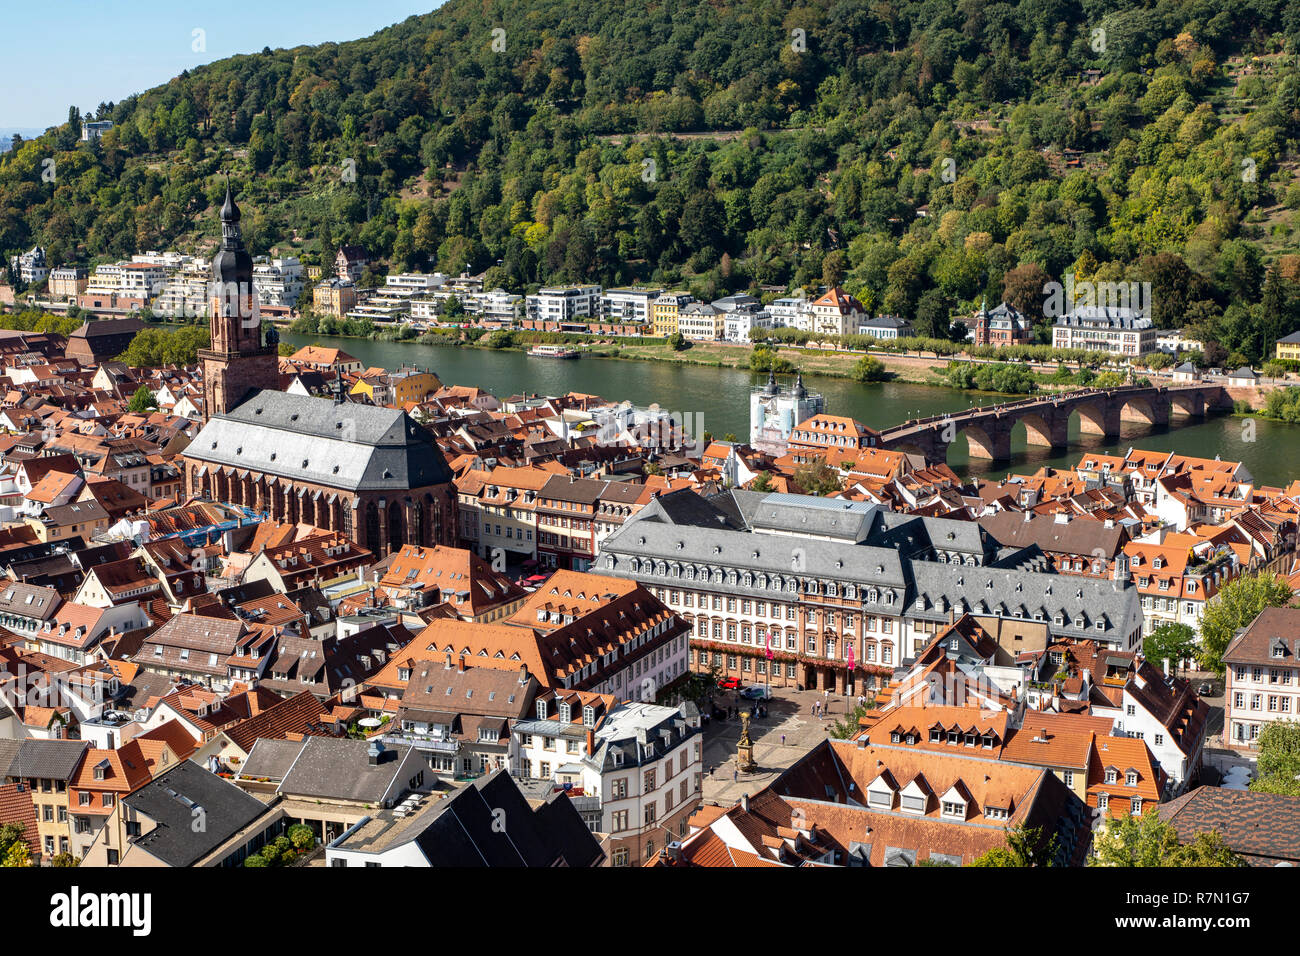 Vista sulla città vecchia di Heidelberg, Neckar, Heiliggeistkirche, vecchio ponte Neckar, Foto Stock